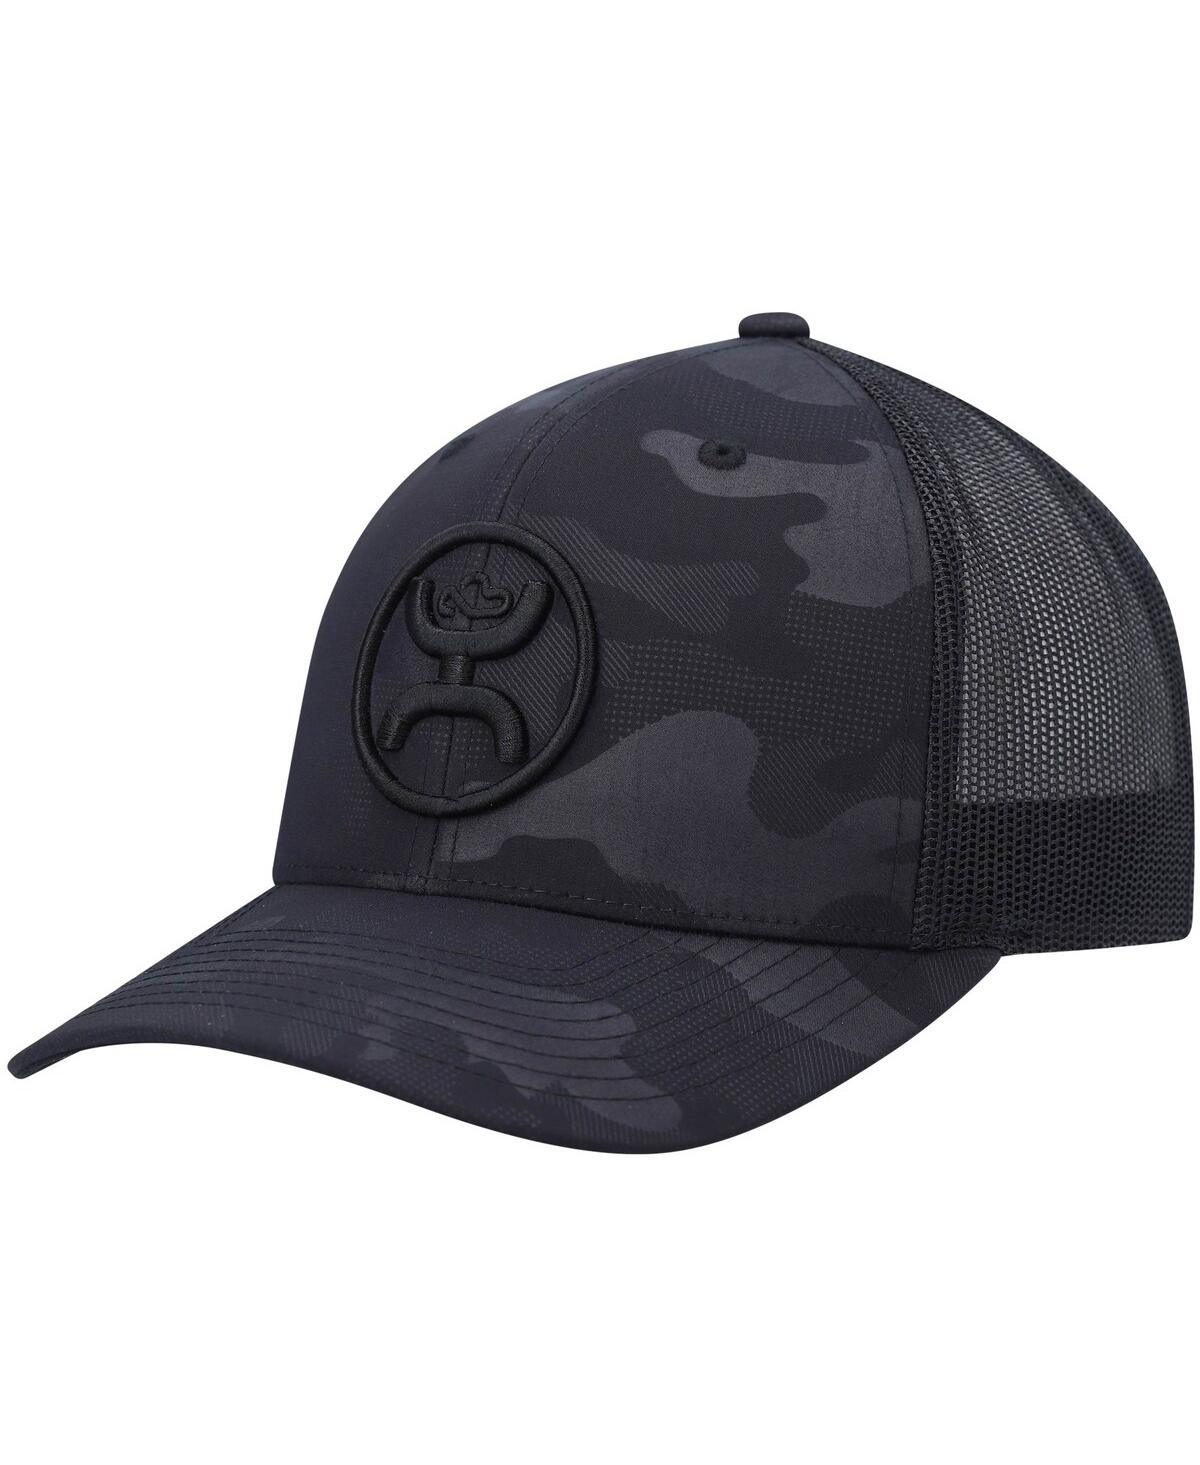 Hooey Men's  Black O-classic Trucker Snapback Hat